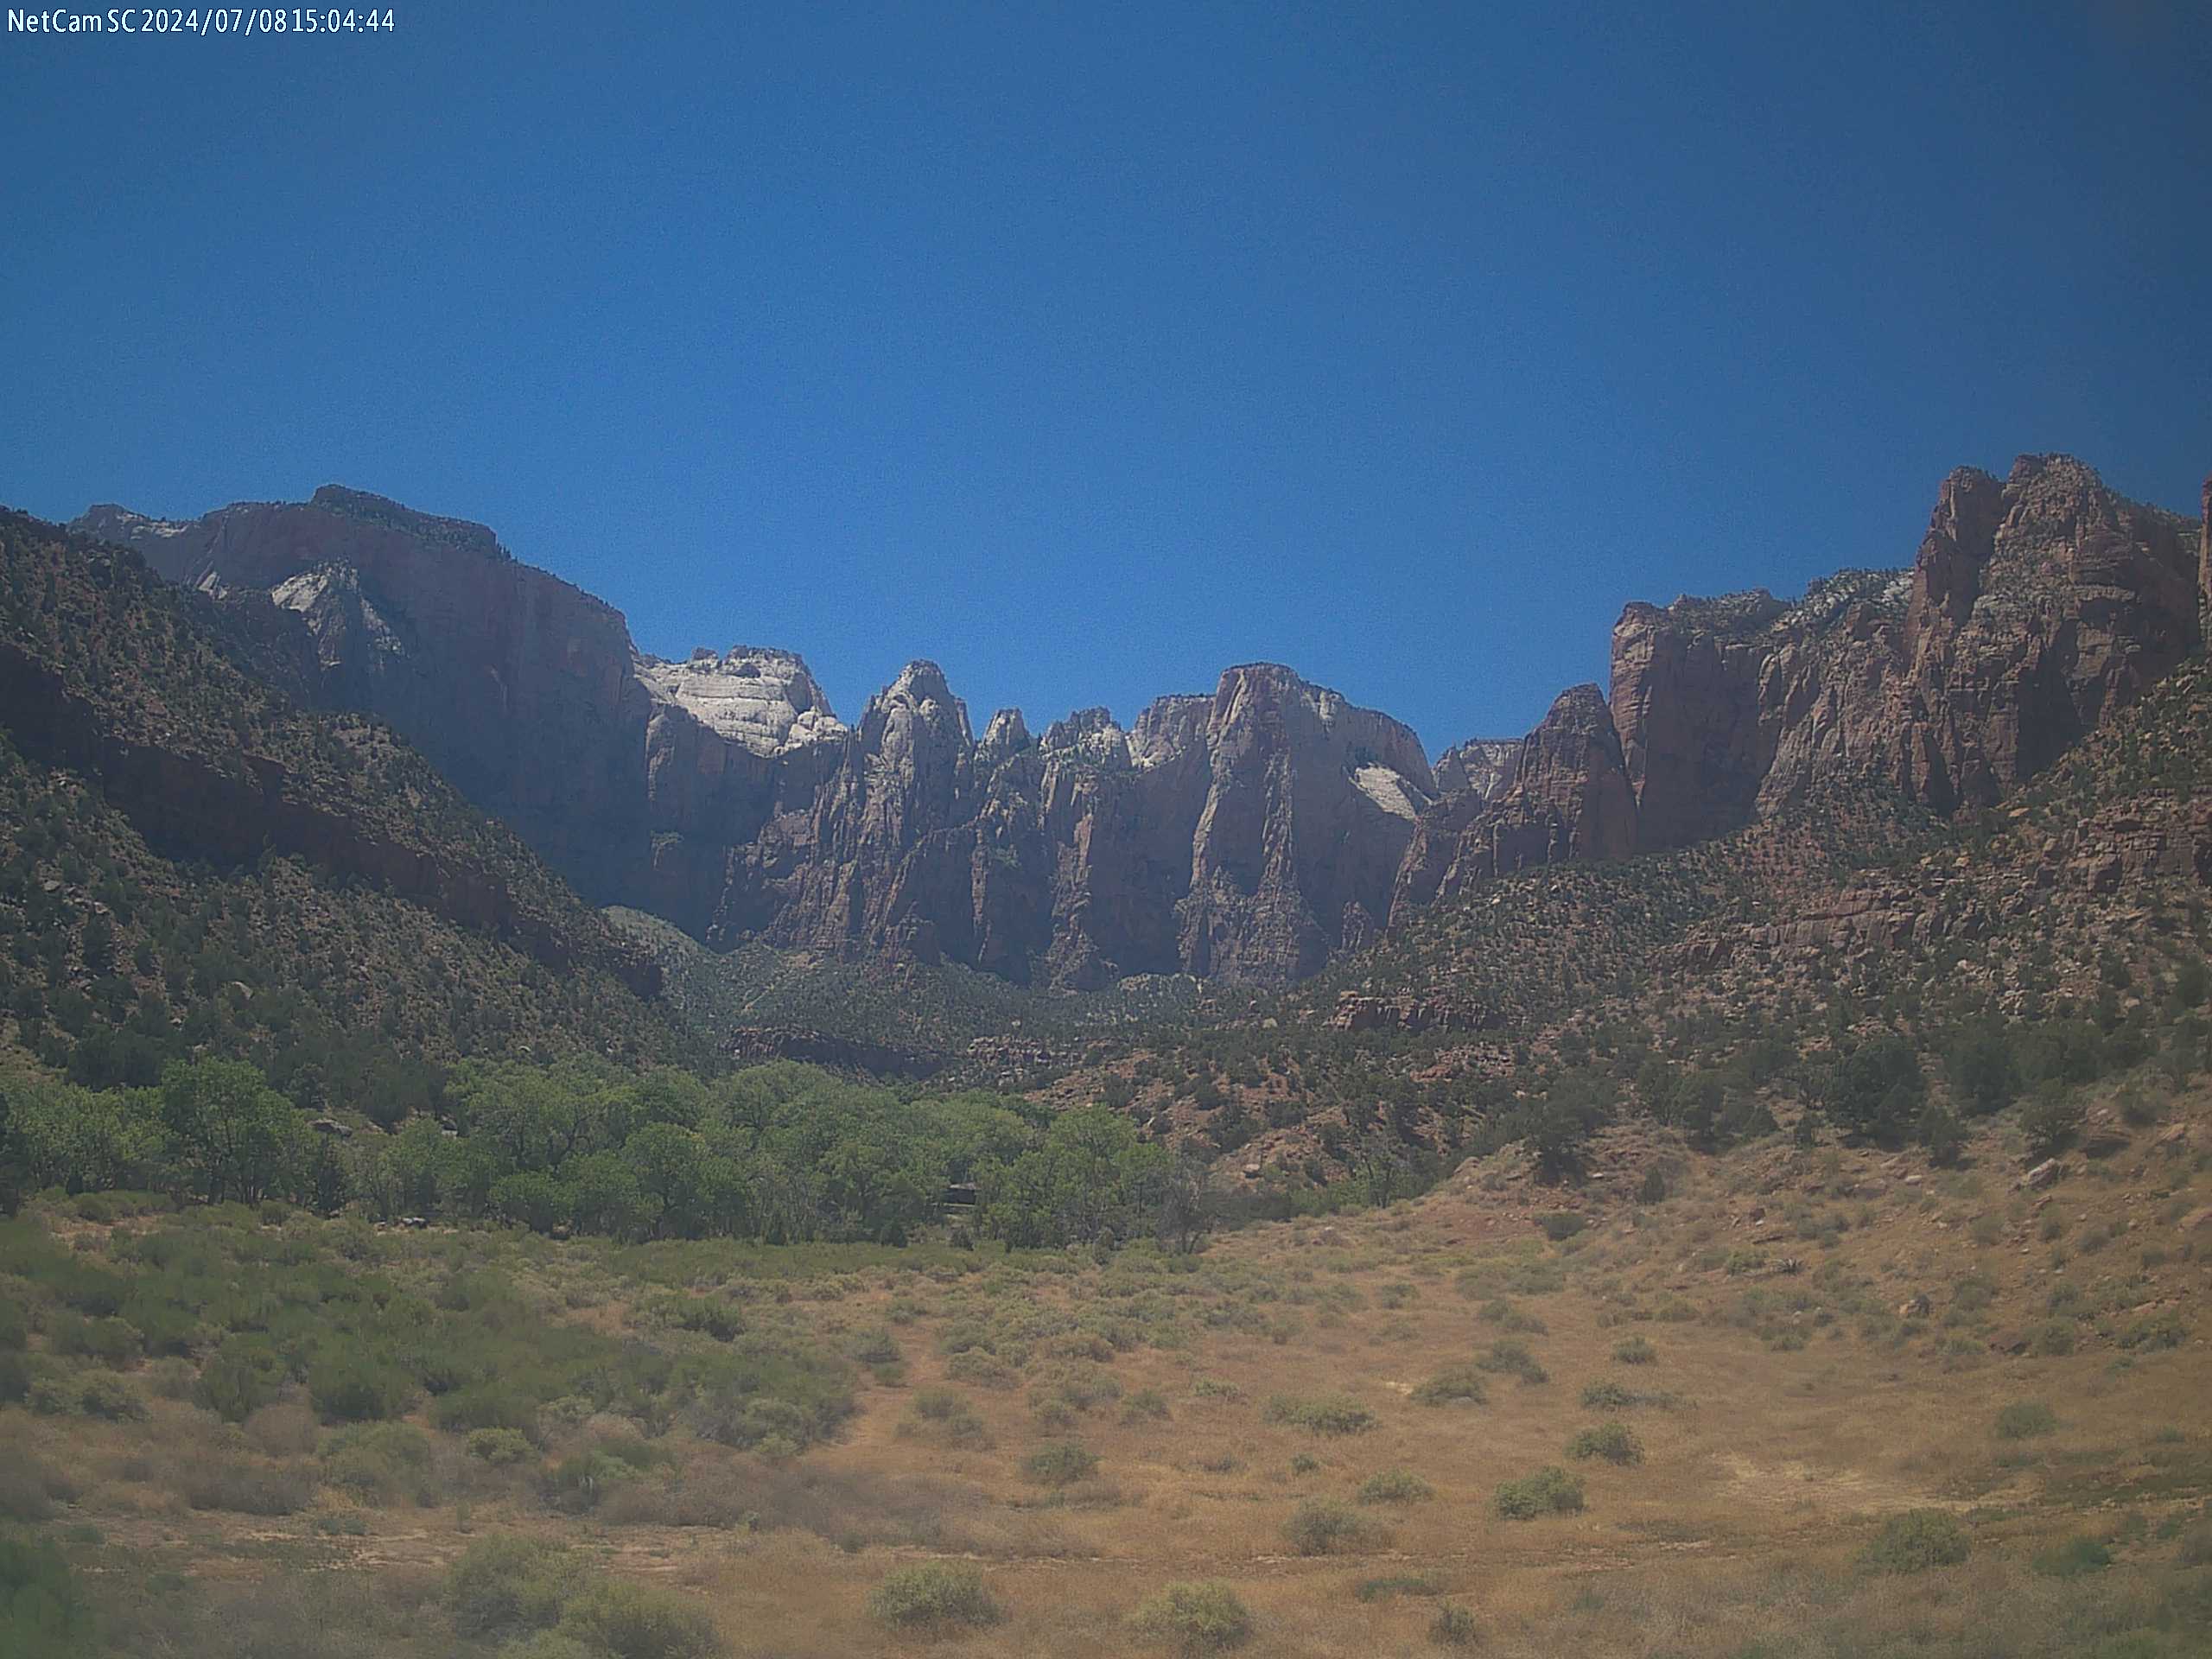 Zion National Park, Utah Vie. 15:05